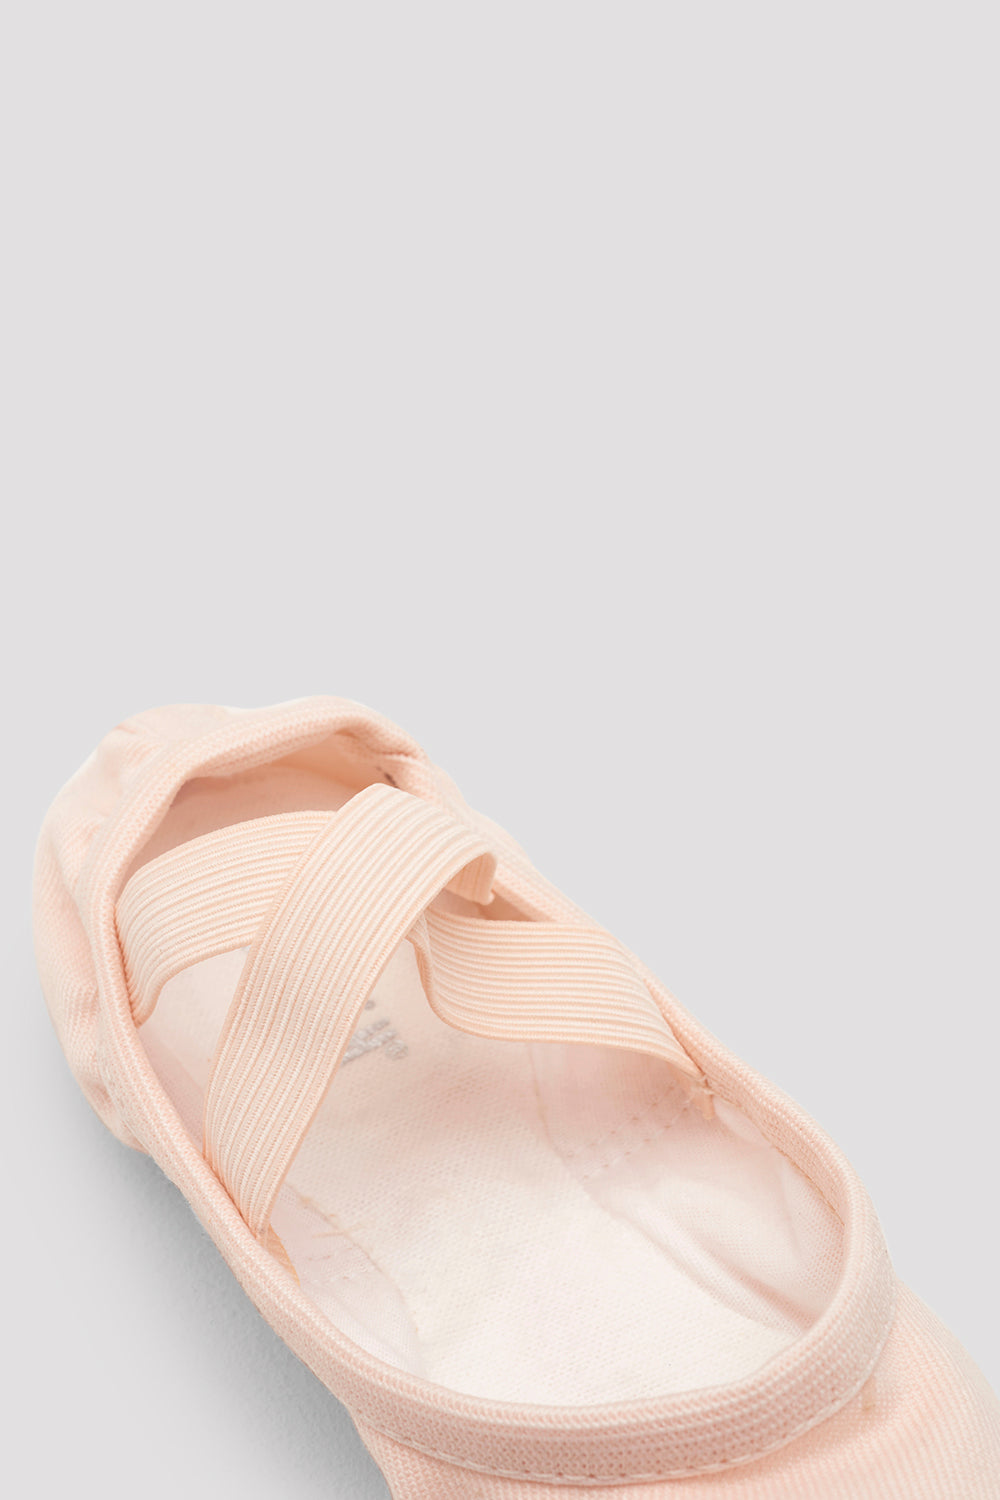 Bloch Women's Performa Dance Shoe, Theatrical Pink